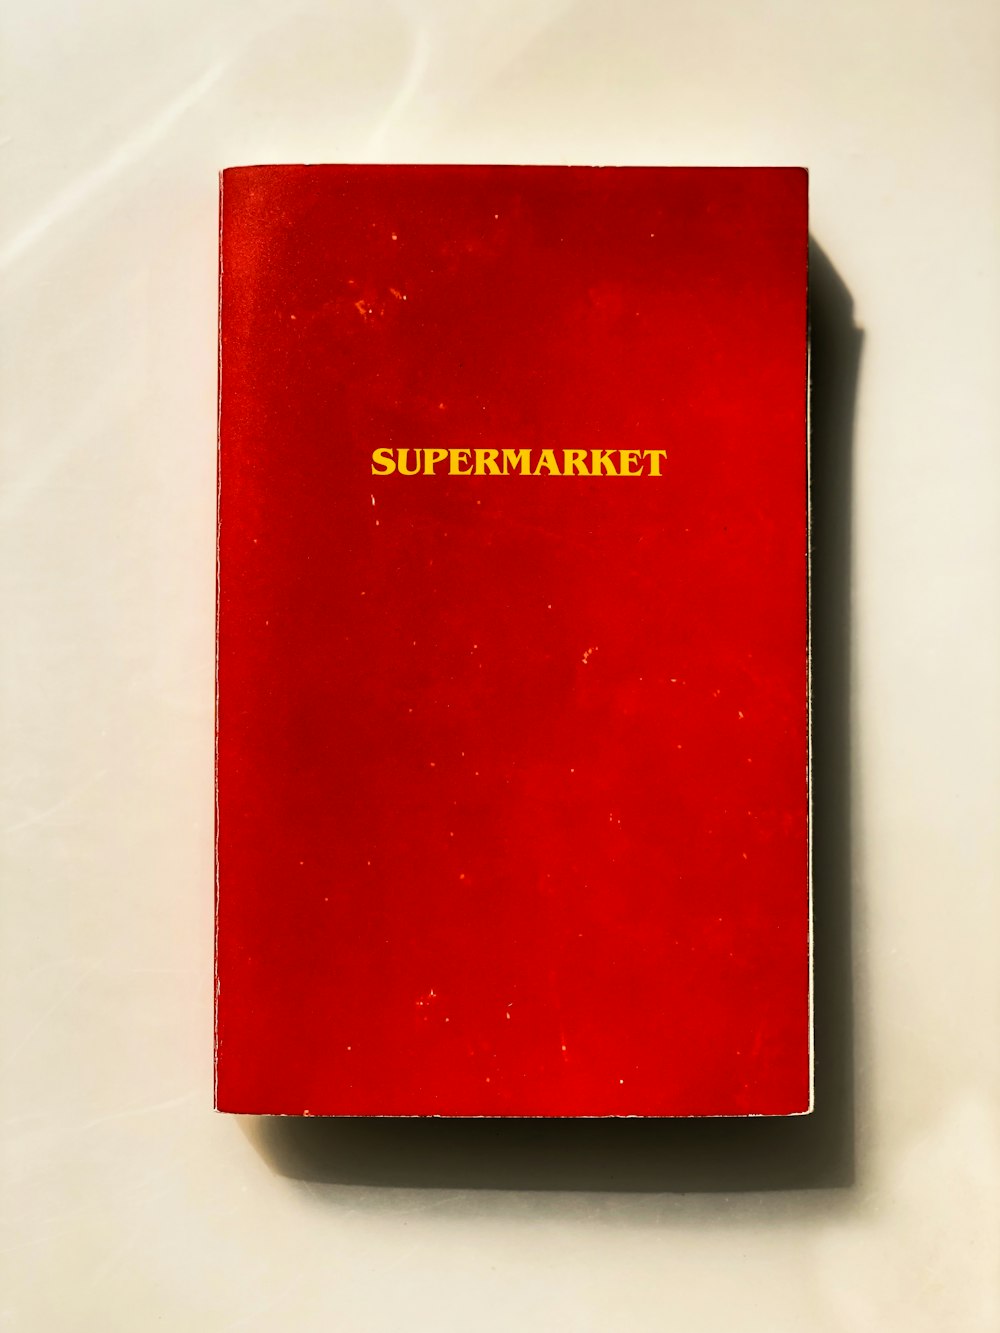 Supermatket book